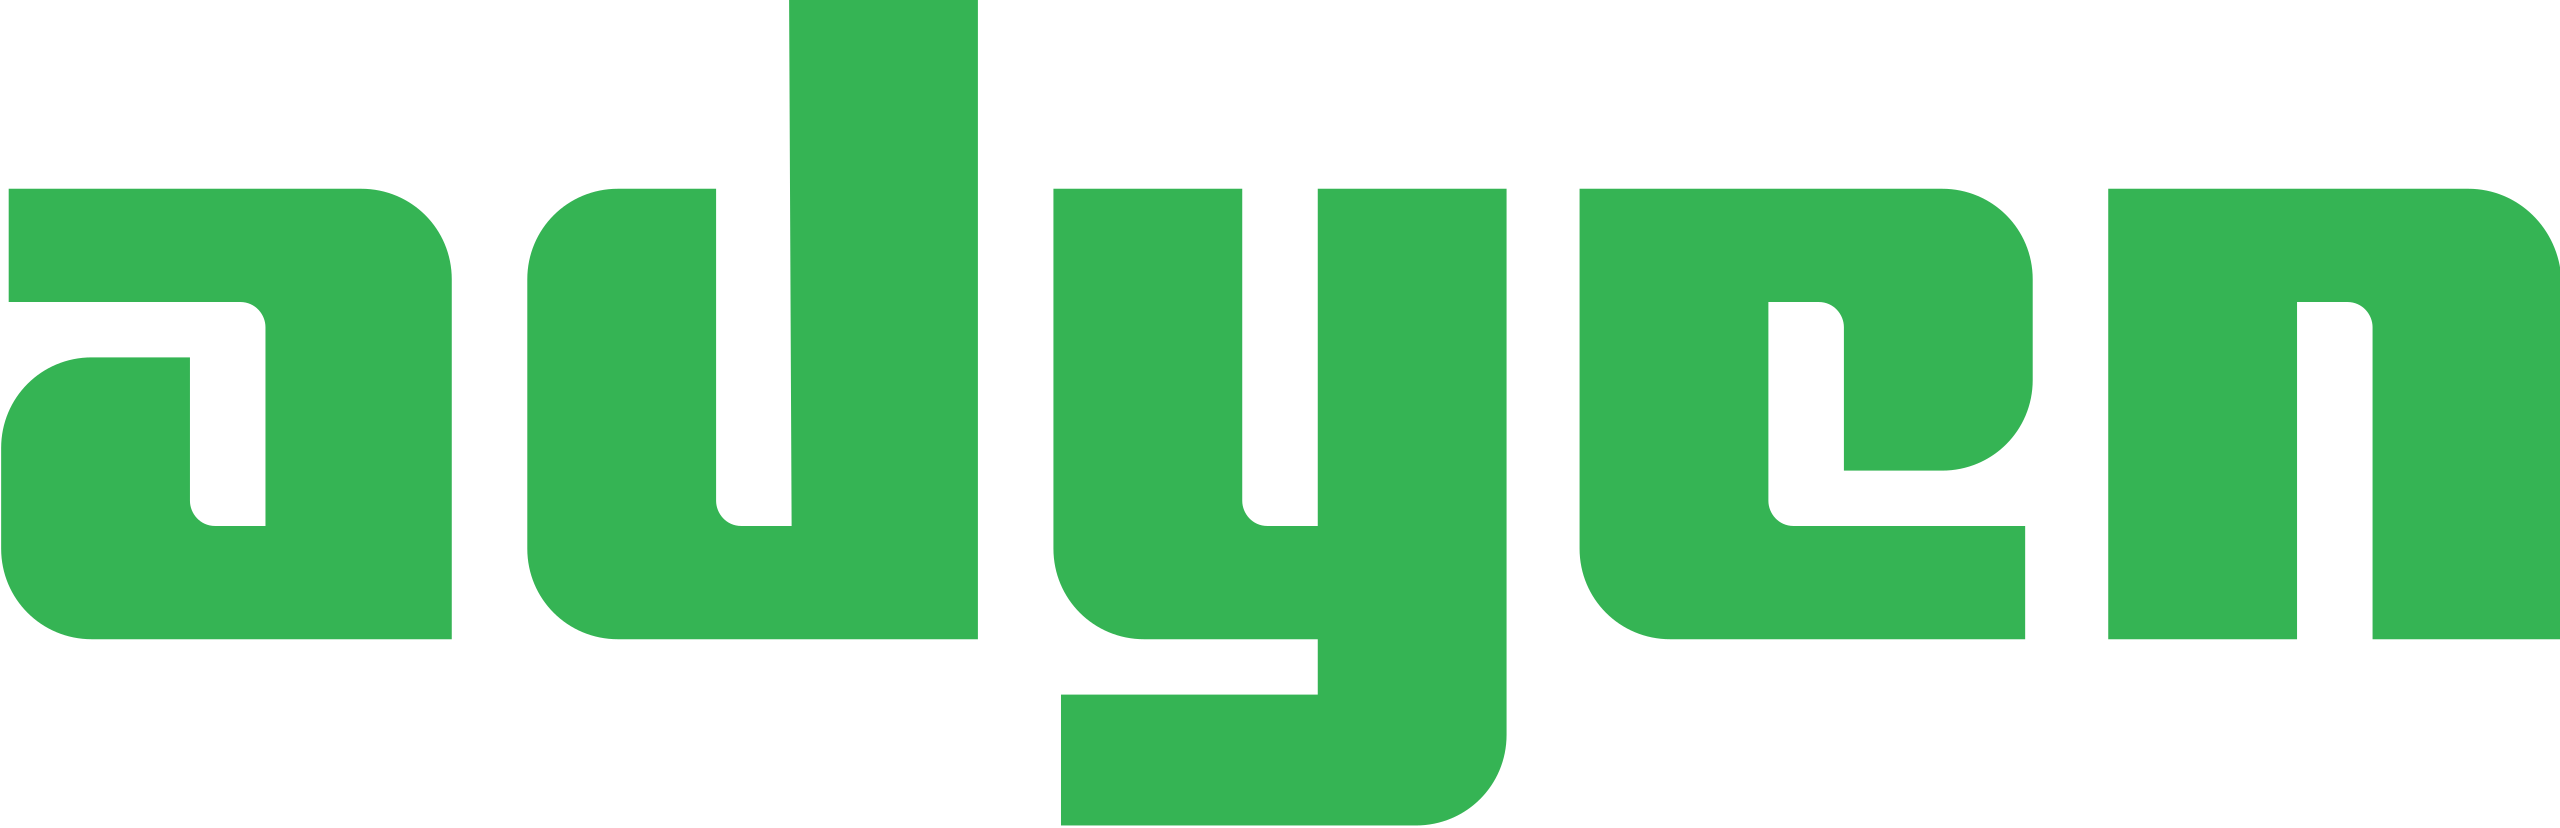 Adyen_Corporate_Logo.svg